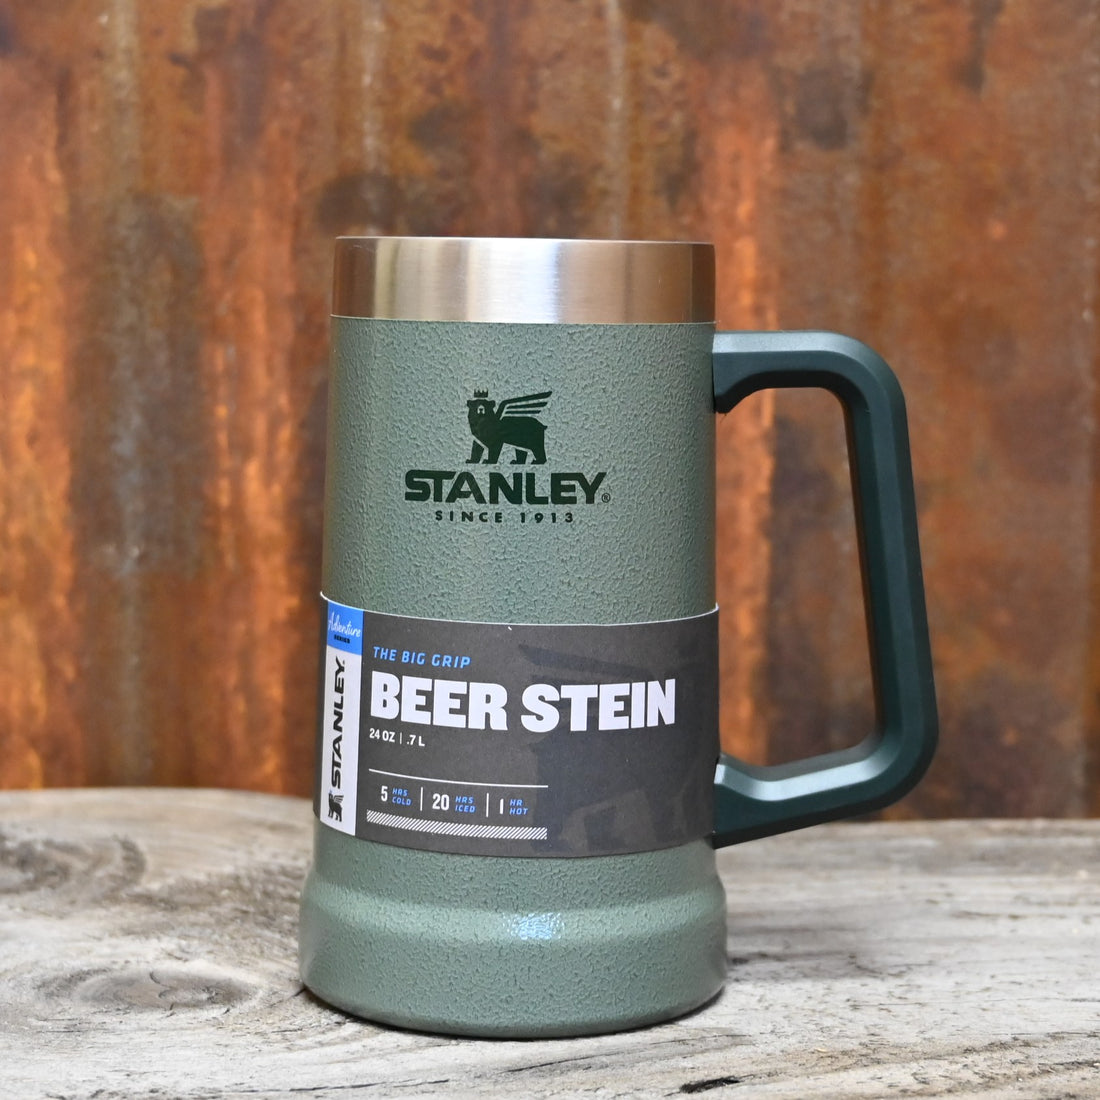 Stanley Adventure Big Grip Beer Stein in Hammertone Green view of beer stein